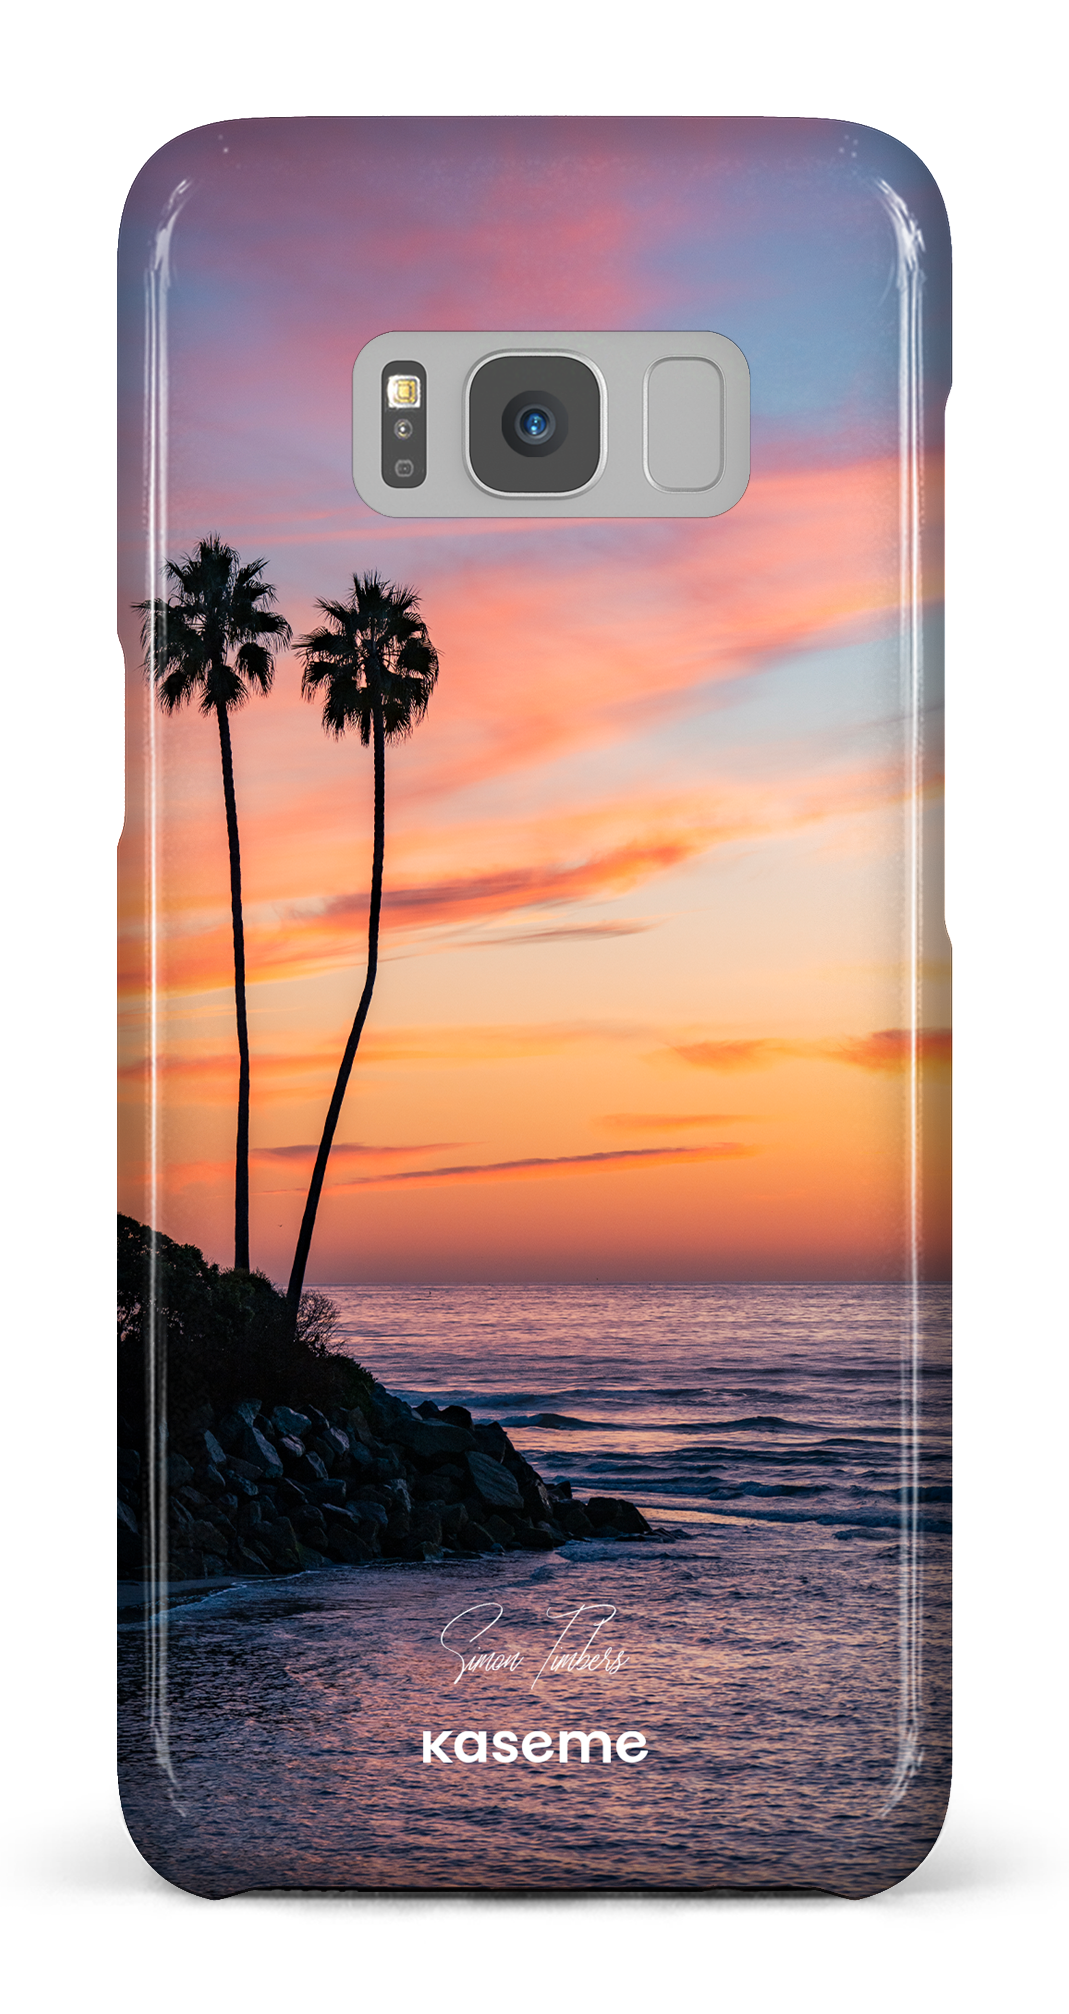 Sunset Palms by Simon Timbers - Galaxy S8